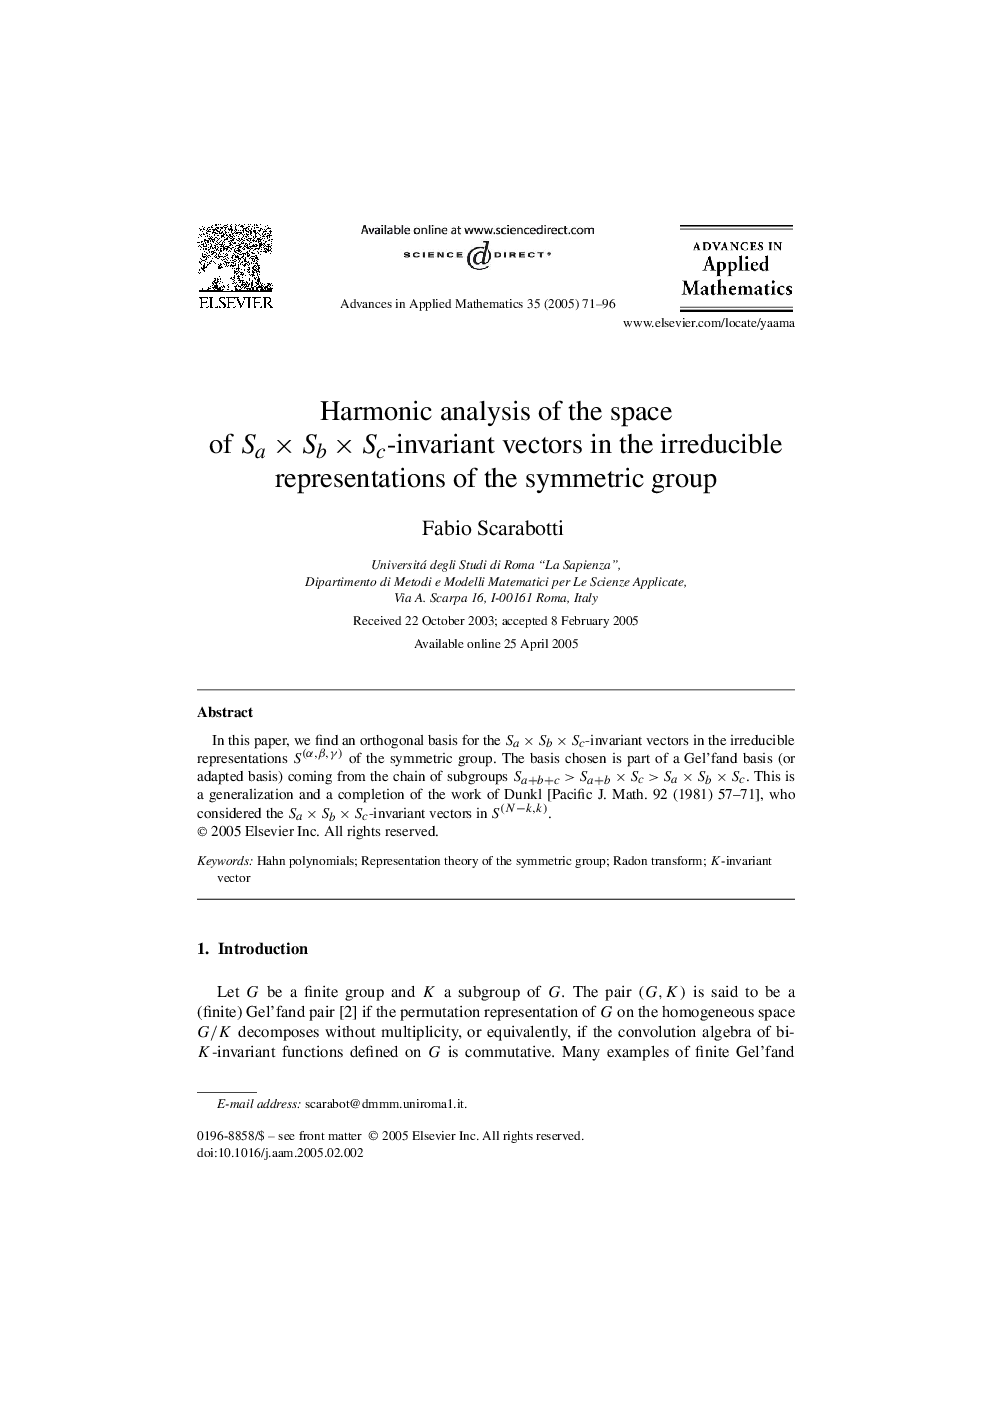 Harmonic analysis of the space of SaÃSbÃSc-invariant vectors in the irreducible representations of the symmetric group